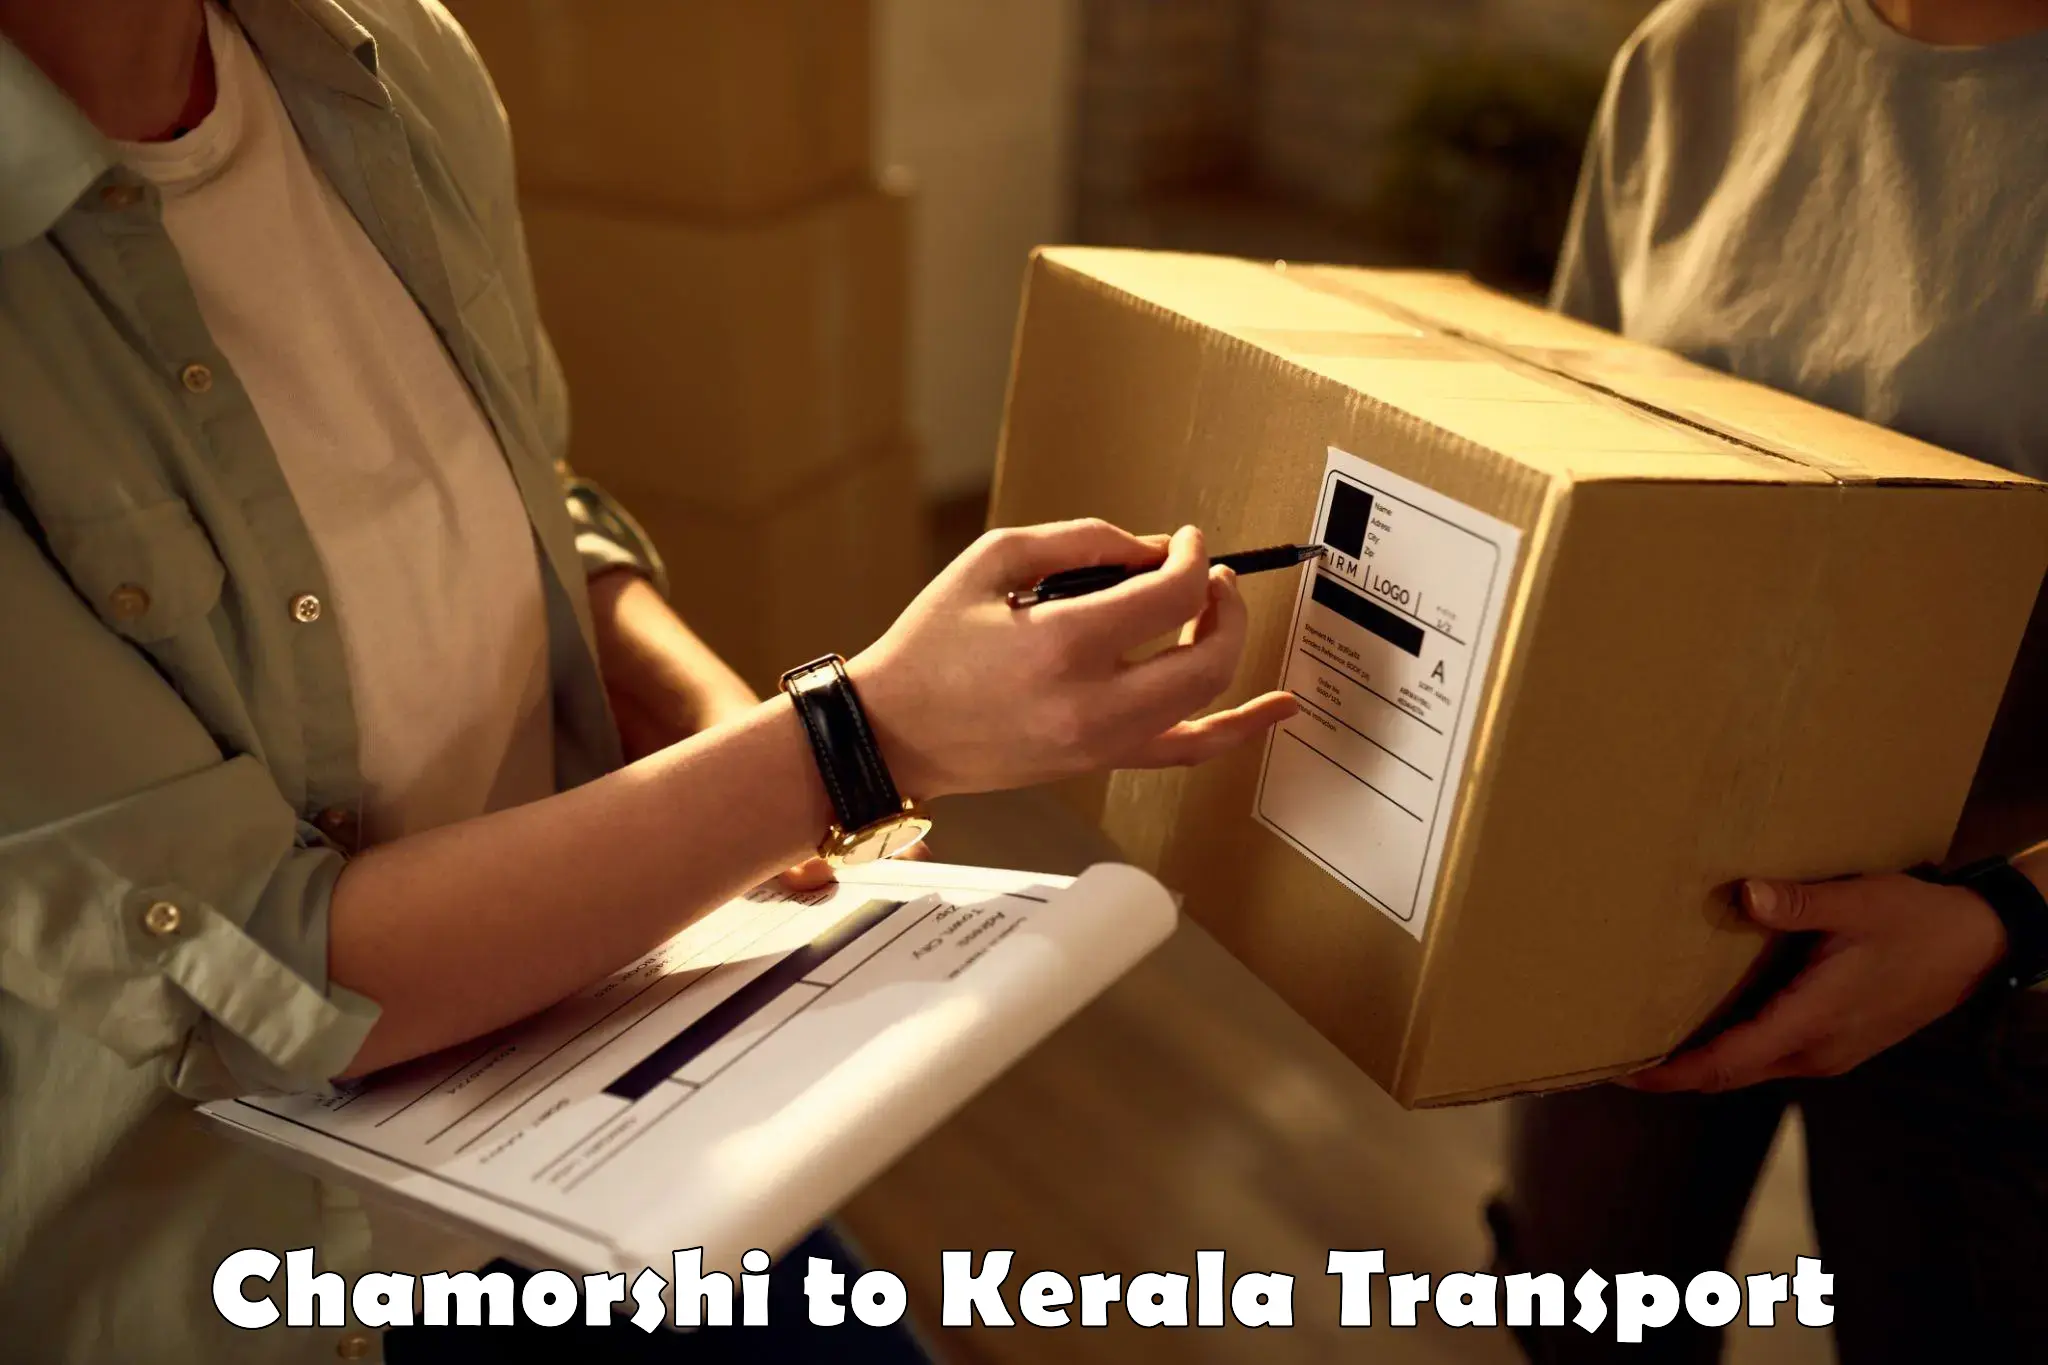 Transport in sharing Chamorshi to Trivandrum